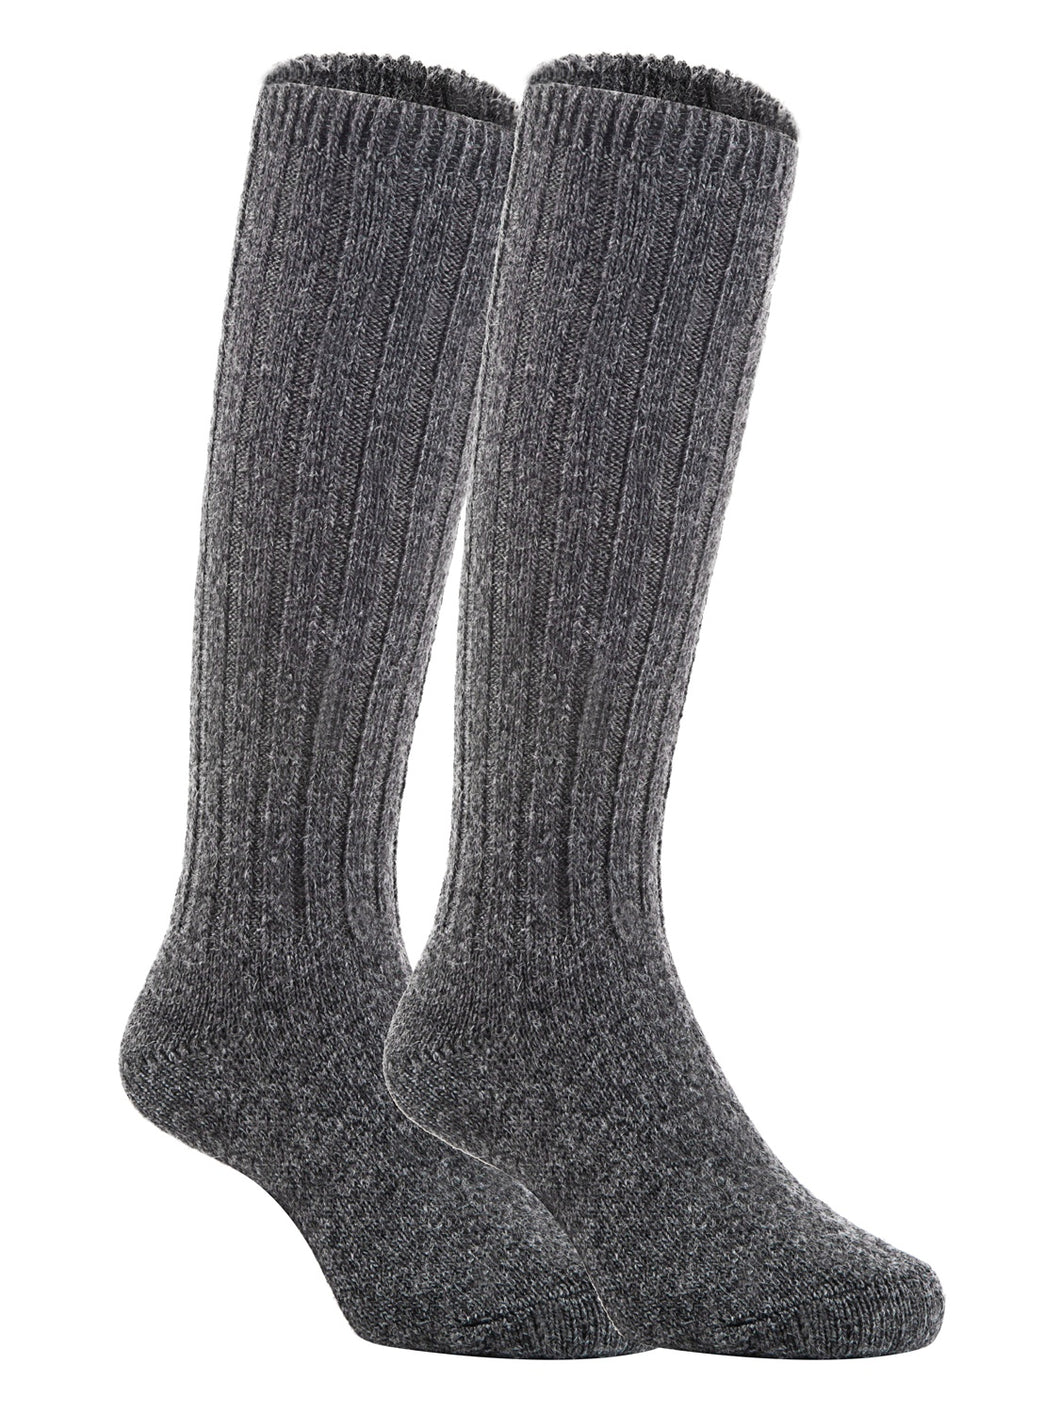 Lian Style Unisex Baby Children 4 Pairs Knee-high Wool Boot Blend Boot Socks Size 4-6Y(Dark Gray)